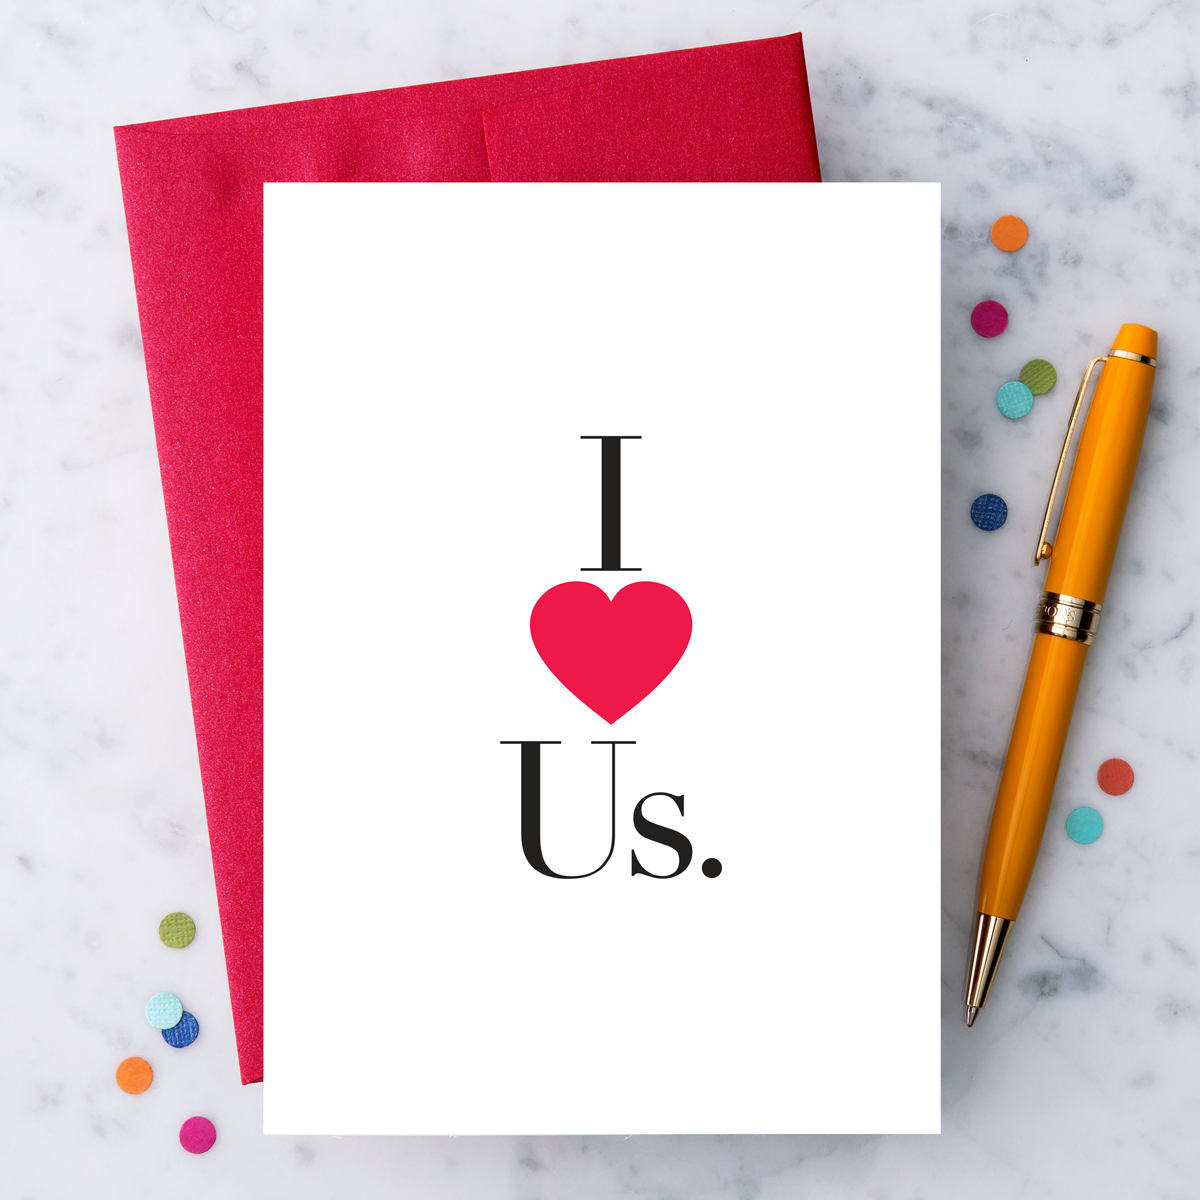 "I Love Us." Greeting Card.